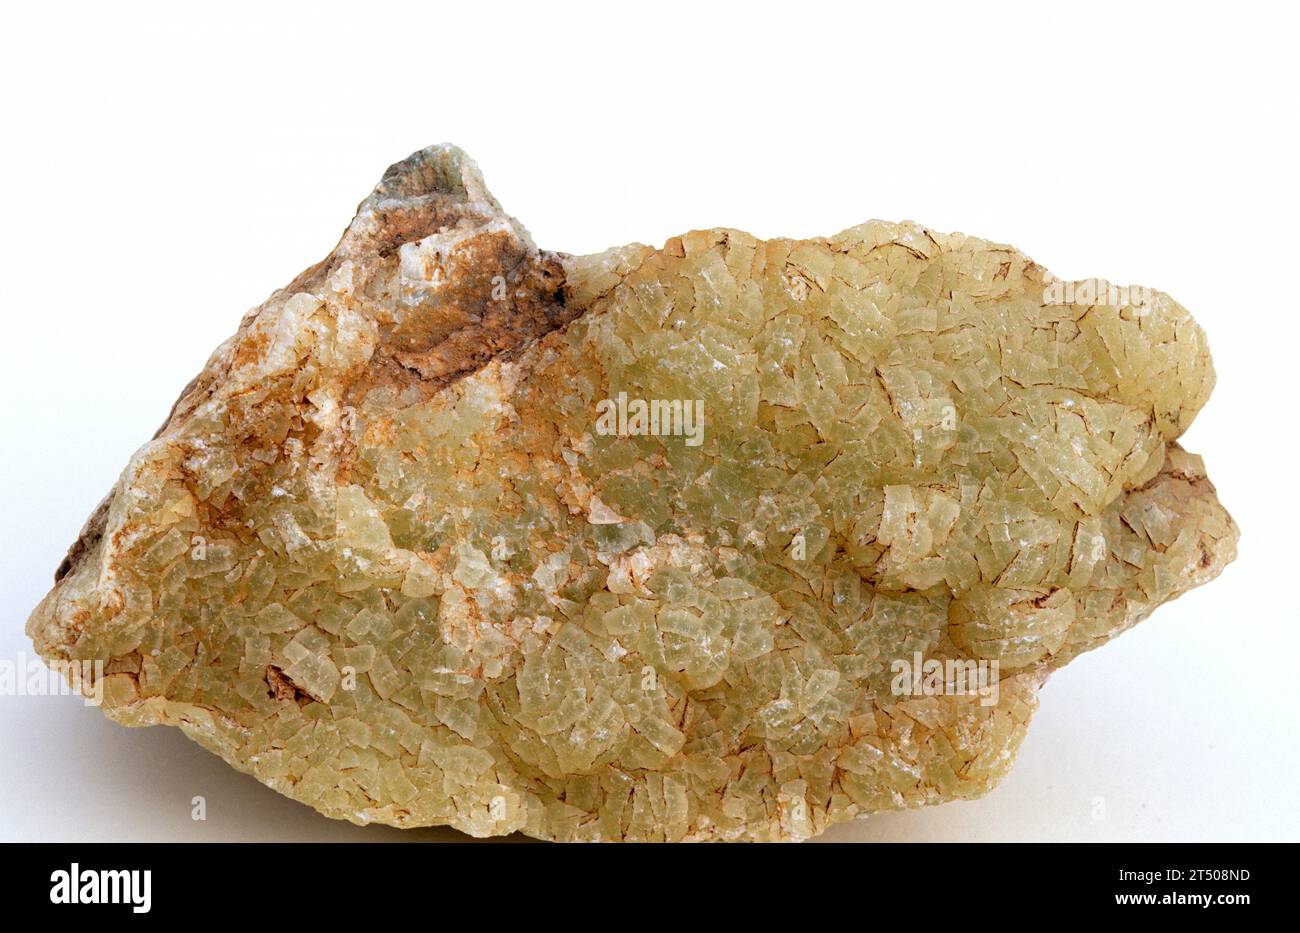 Prehnite is a calcium aluminium silicate mineral. Crystallized sample. Stock Photo